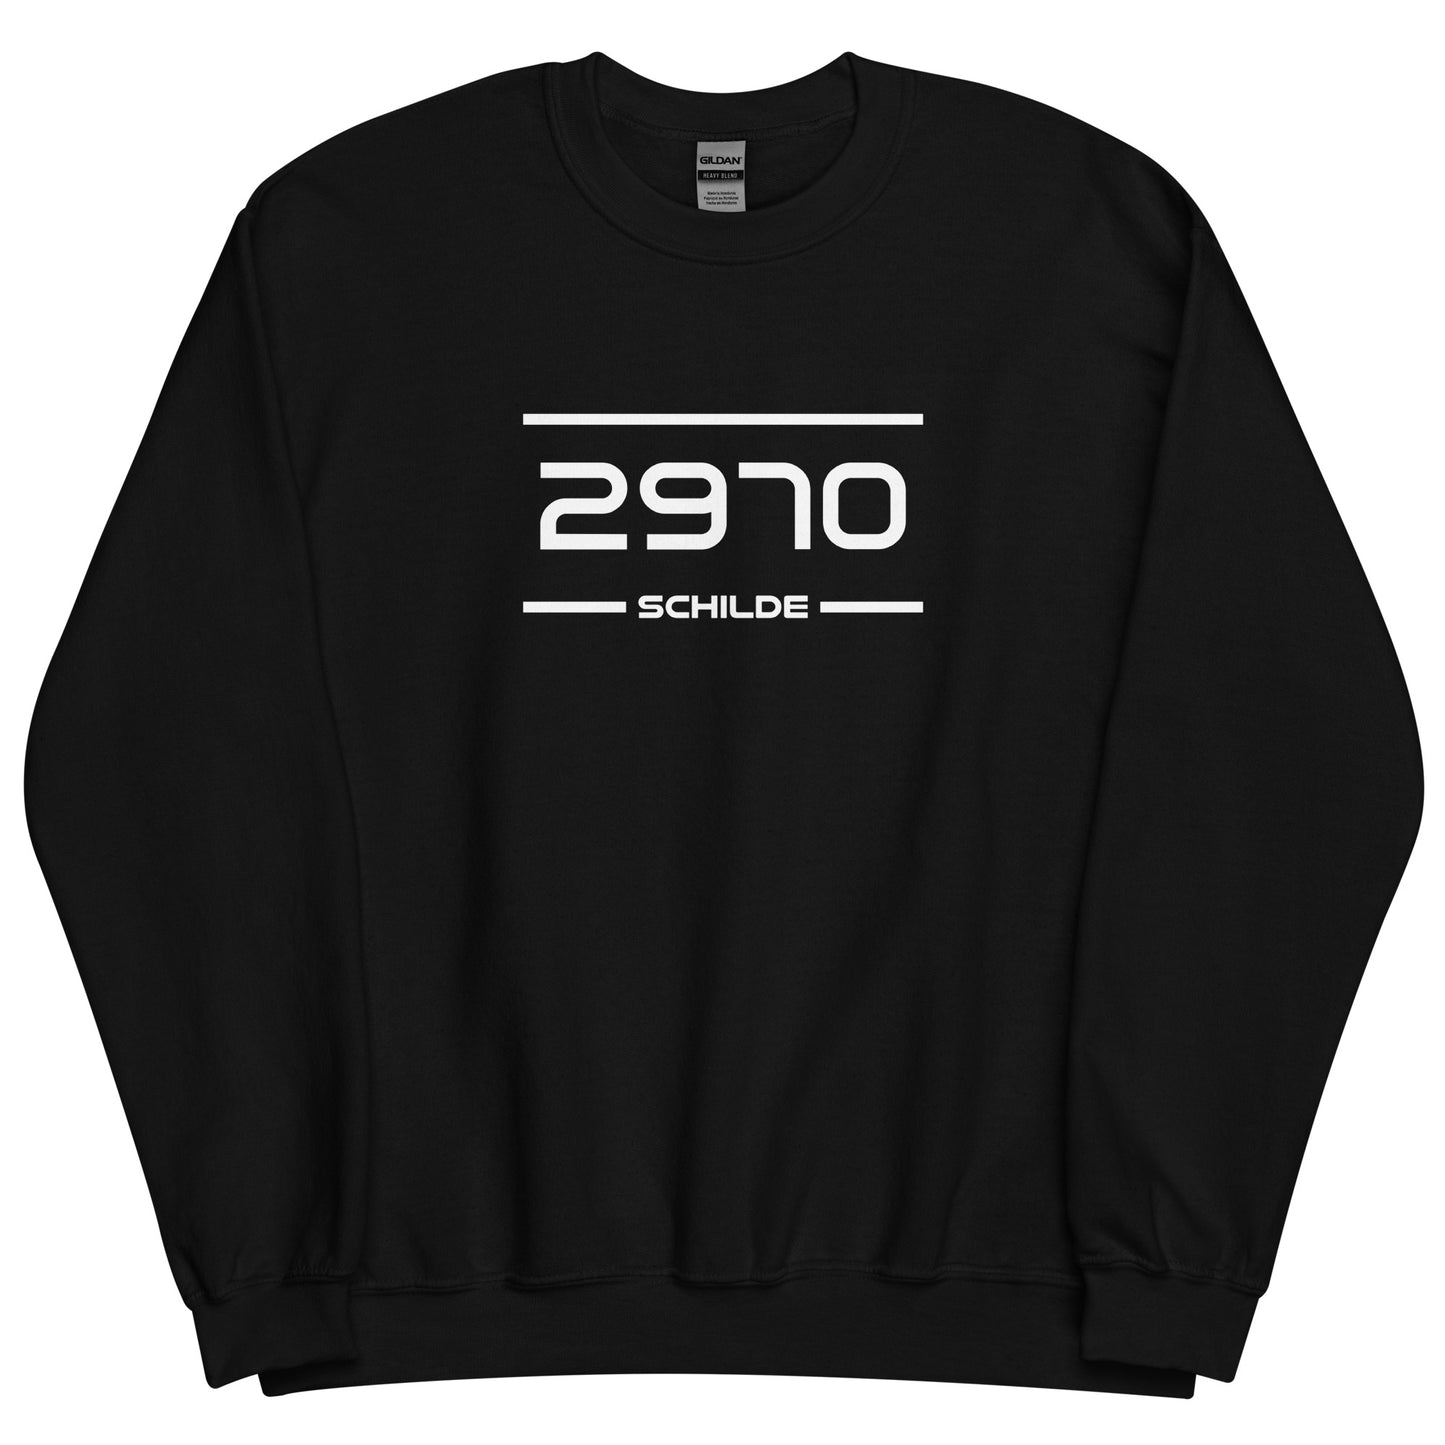 Sweater - 2970 - Schilde (M/V)